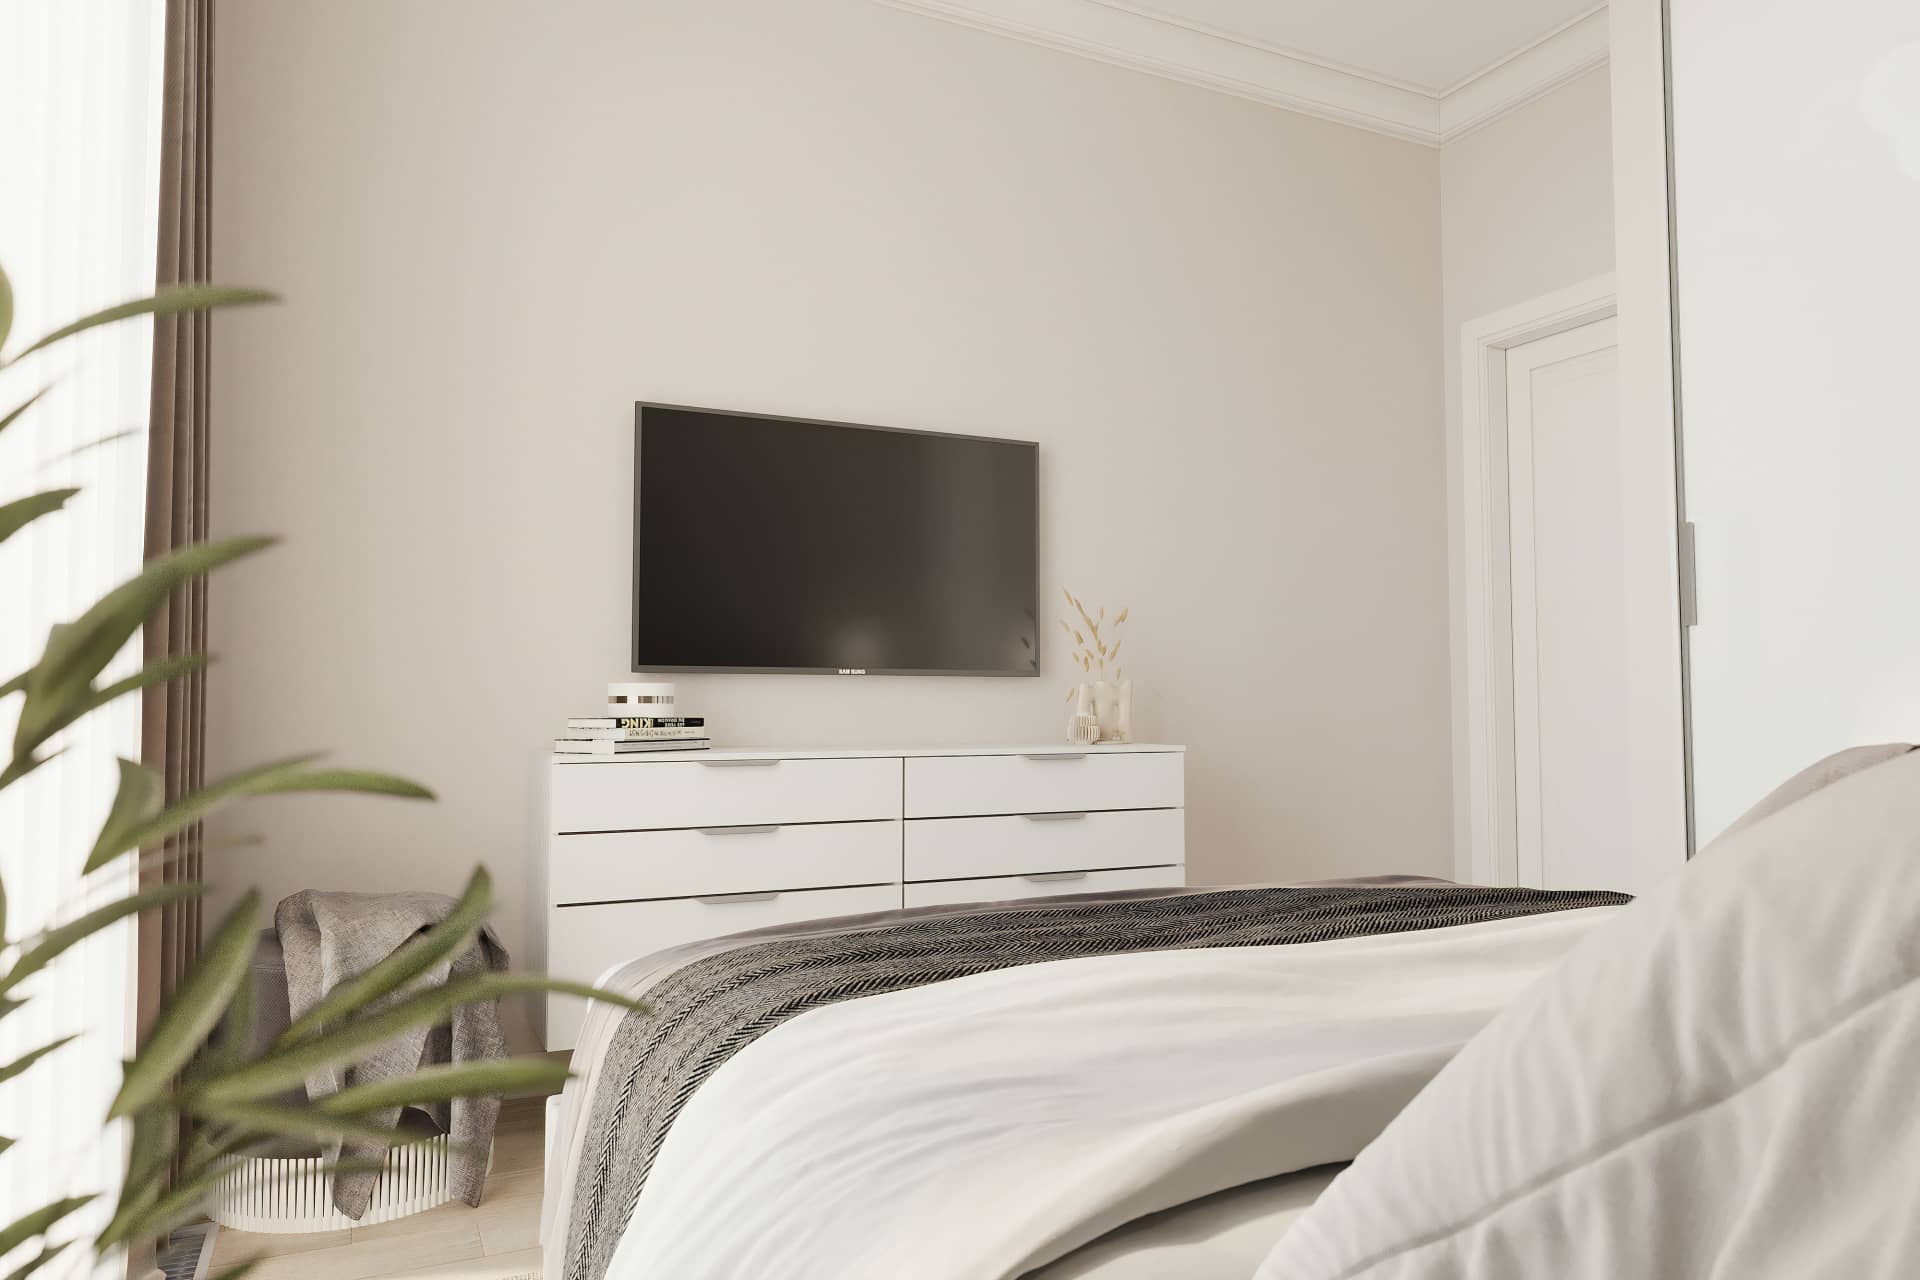 Камод и ТВ зона напротив кровати